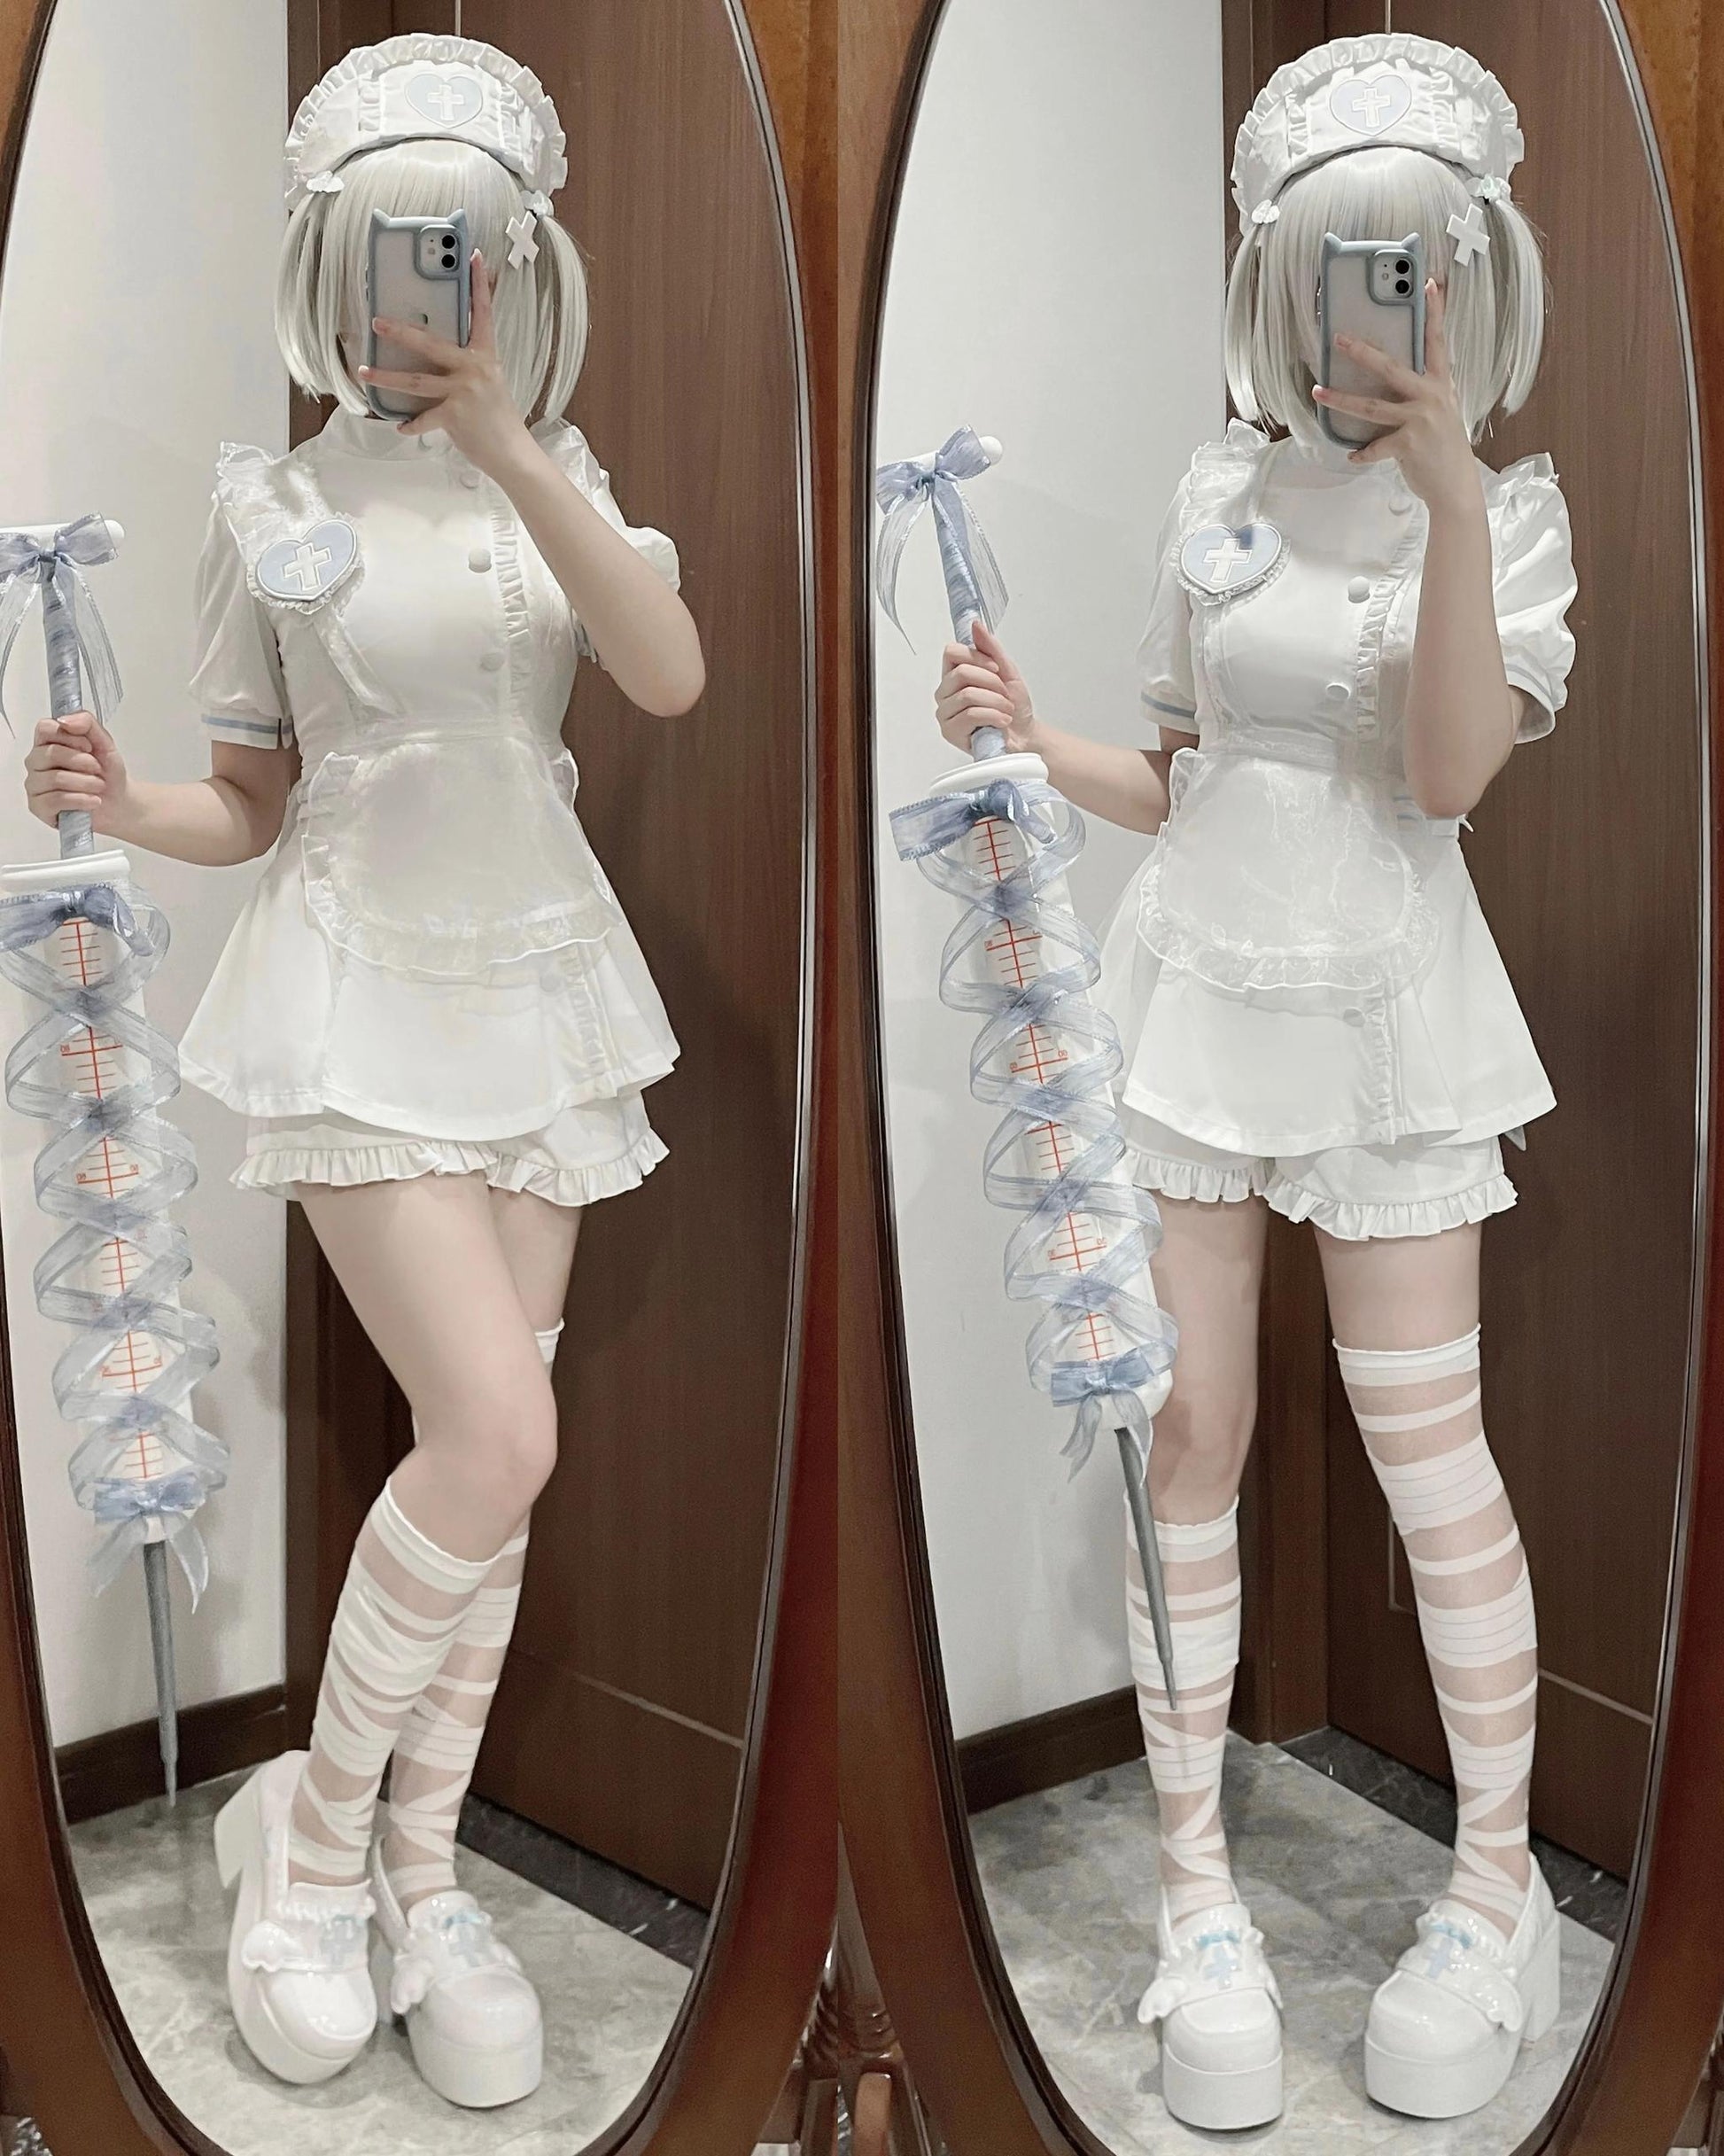 Tenshi Kaiwai Dress Set Nurse Medical Series Outfit Sets 37460:560310